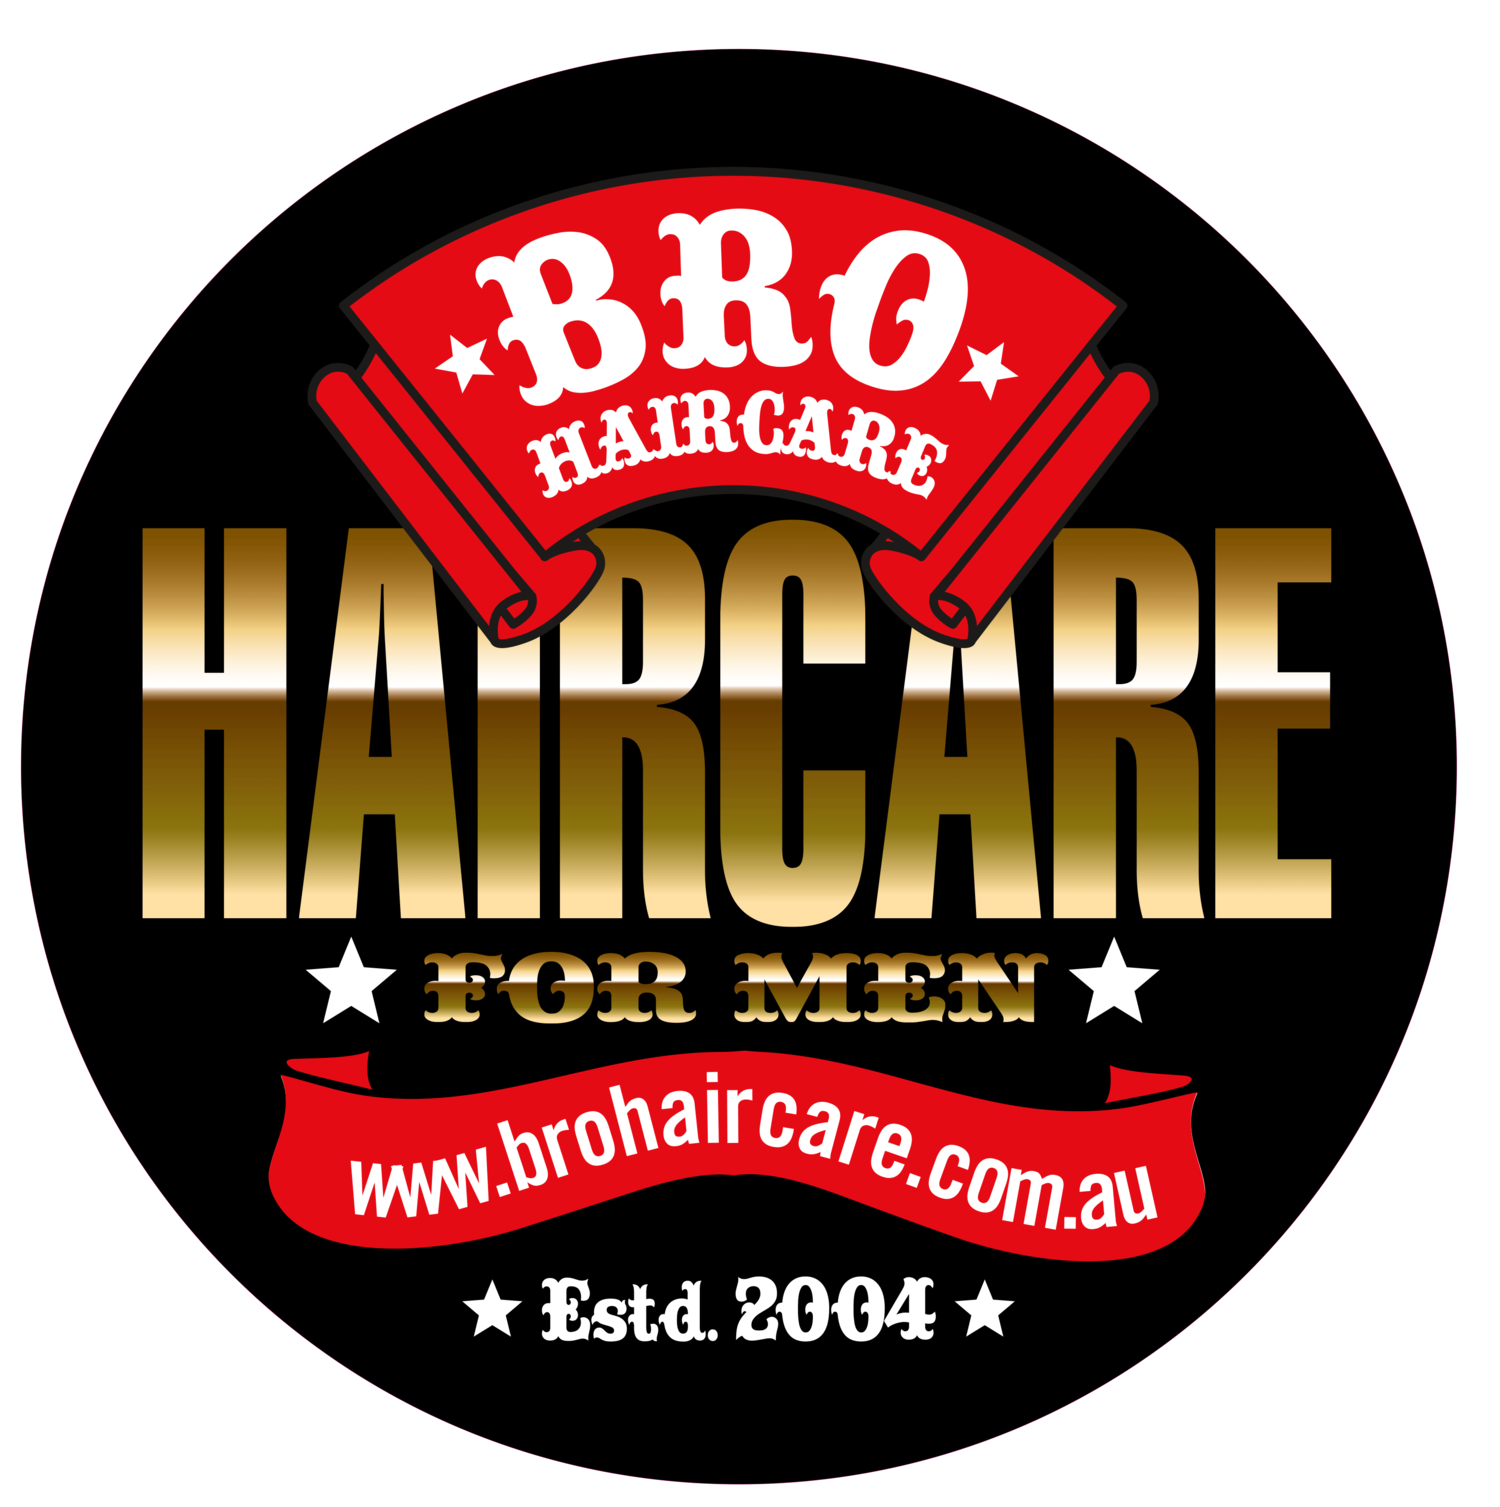 BRO Hair care